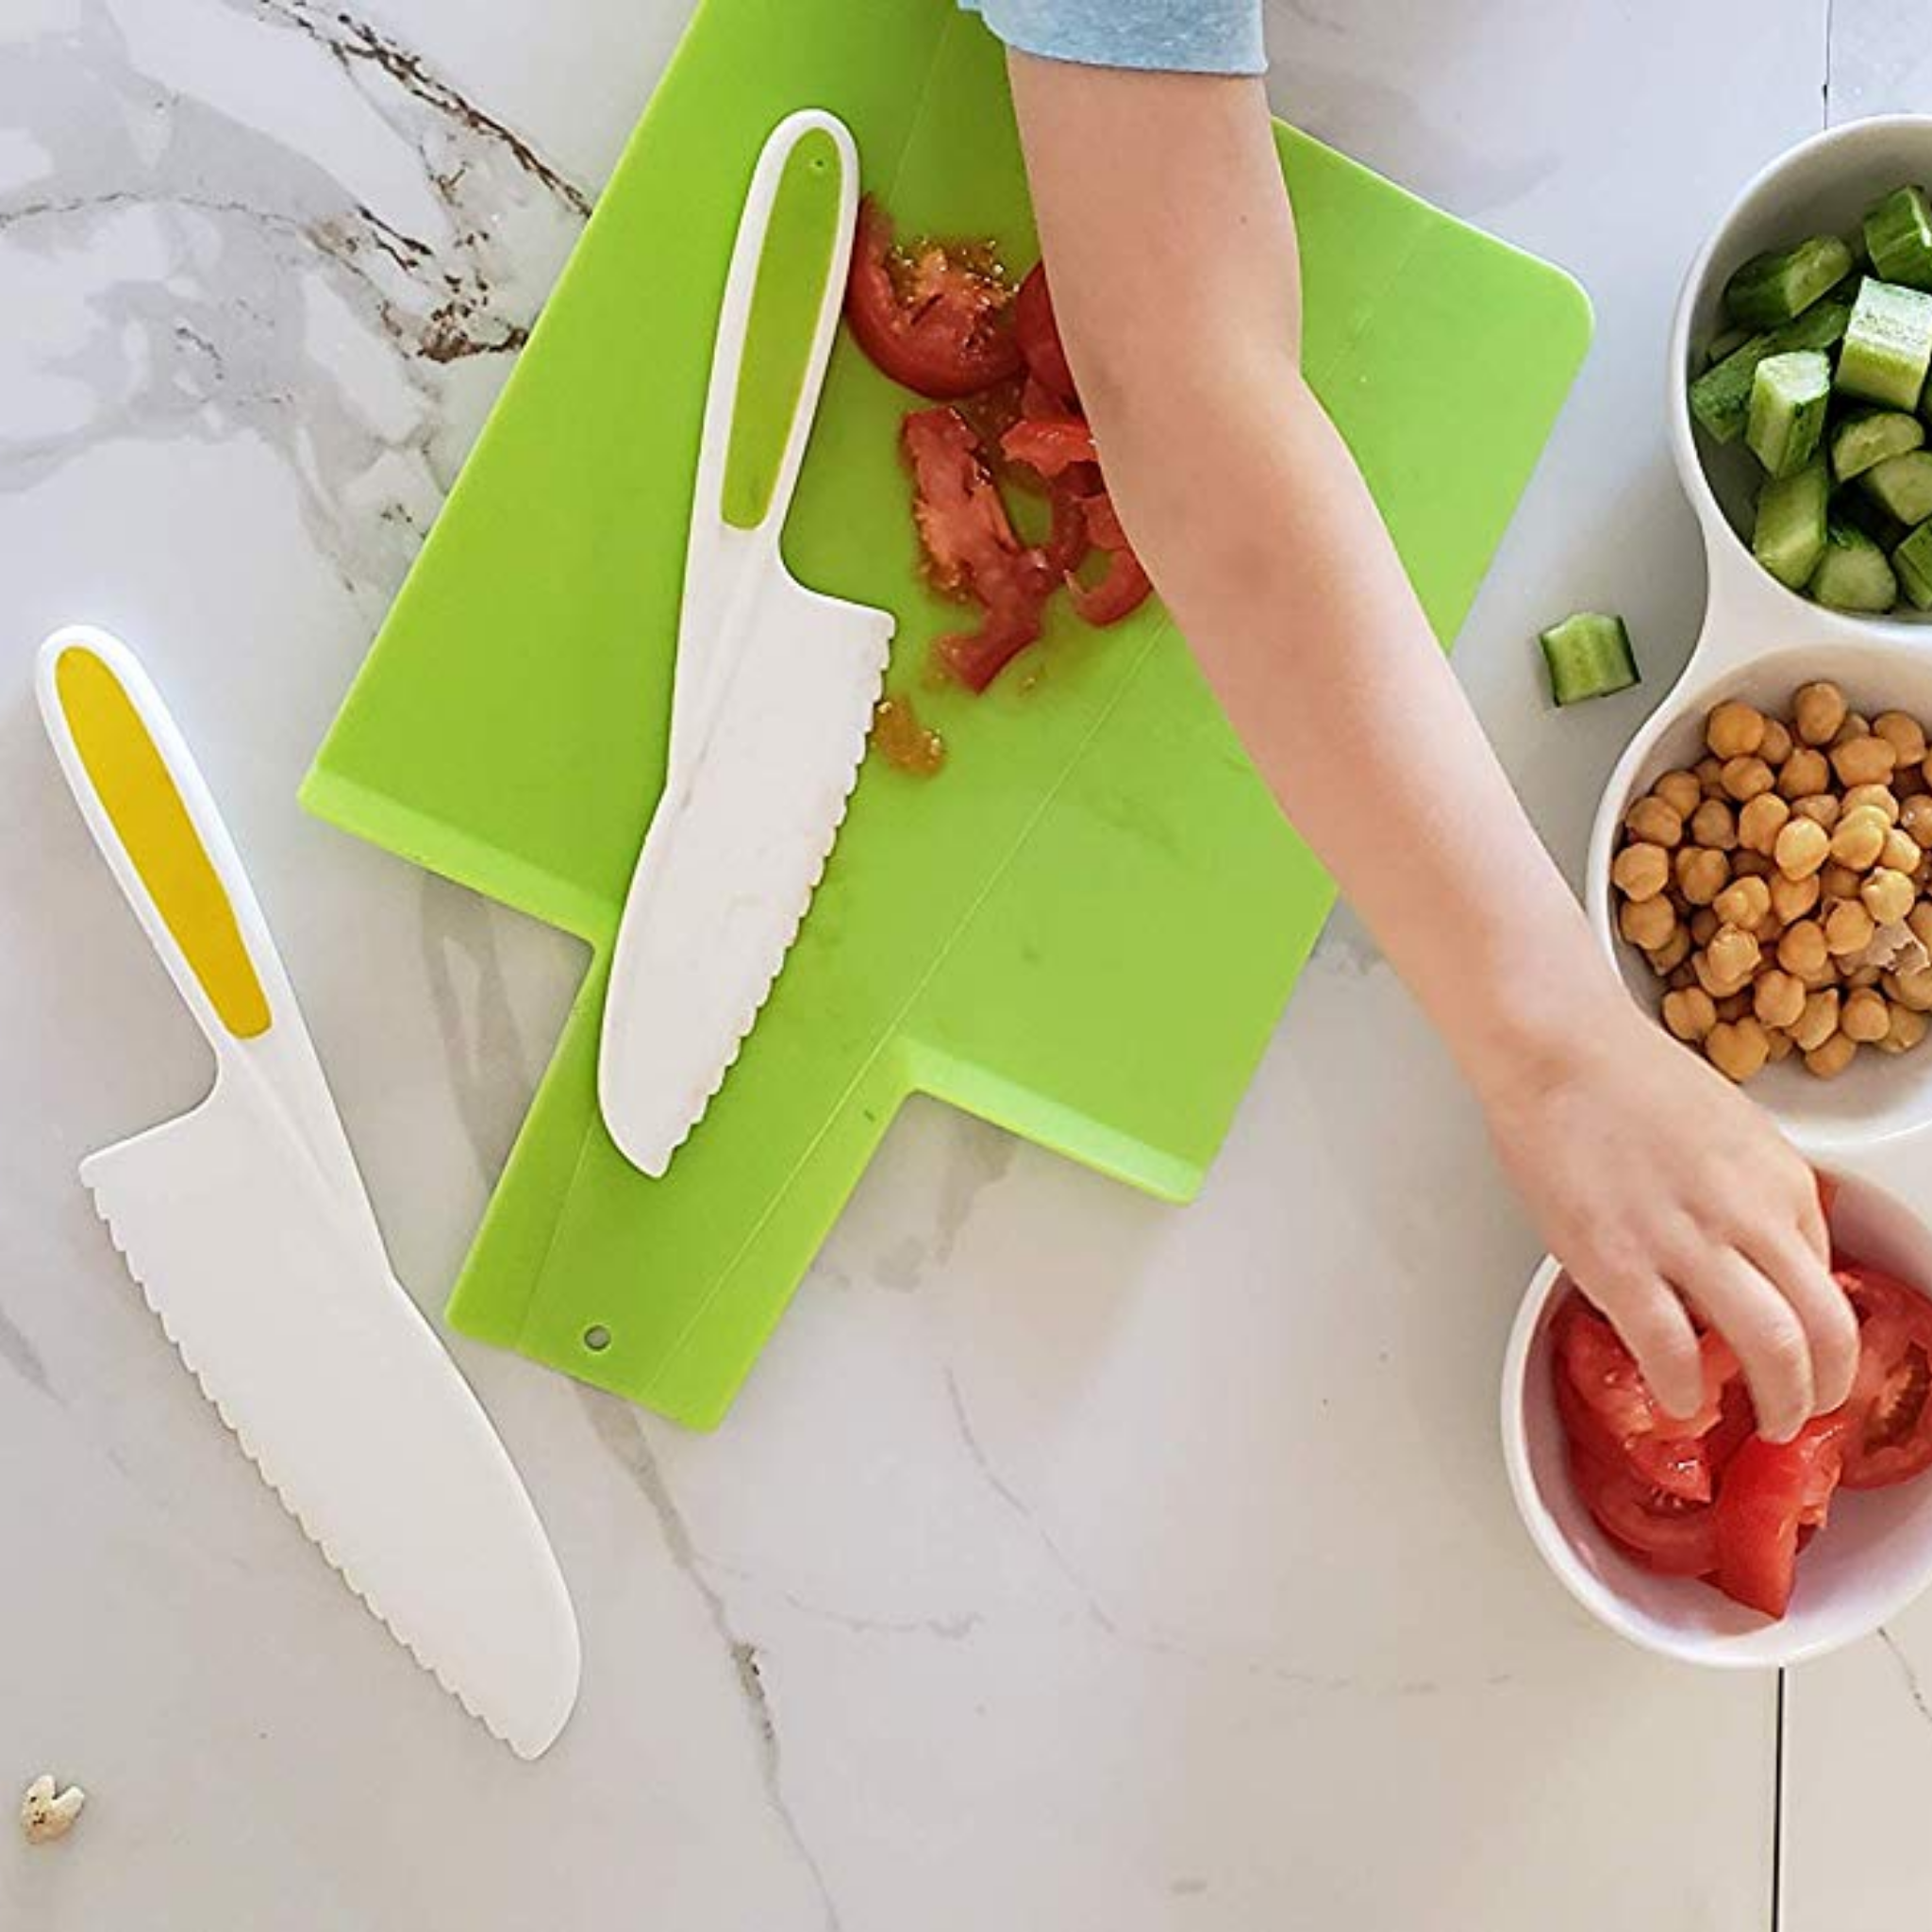 Tovla Jr. Kids Kitchen 3 Knife & Foldable Cutting Board Set Blue